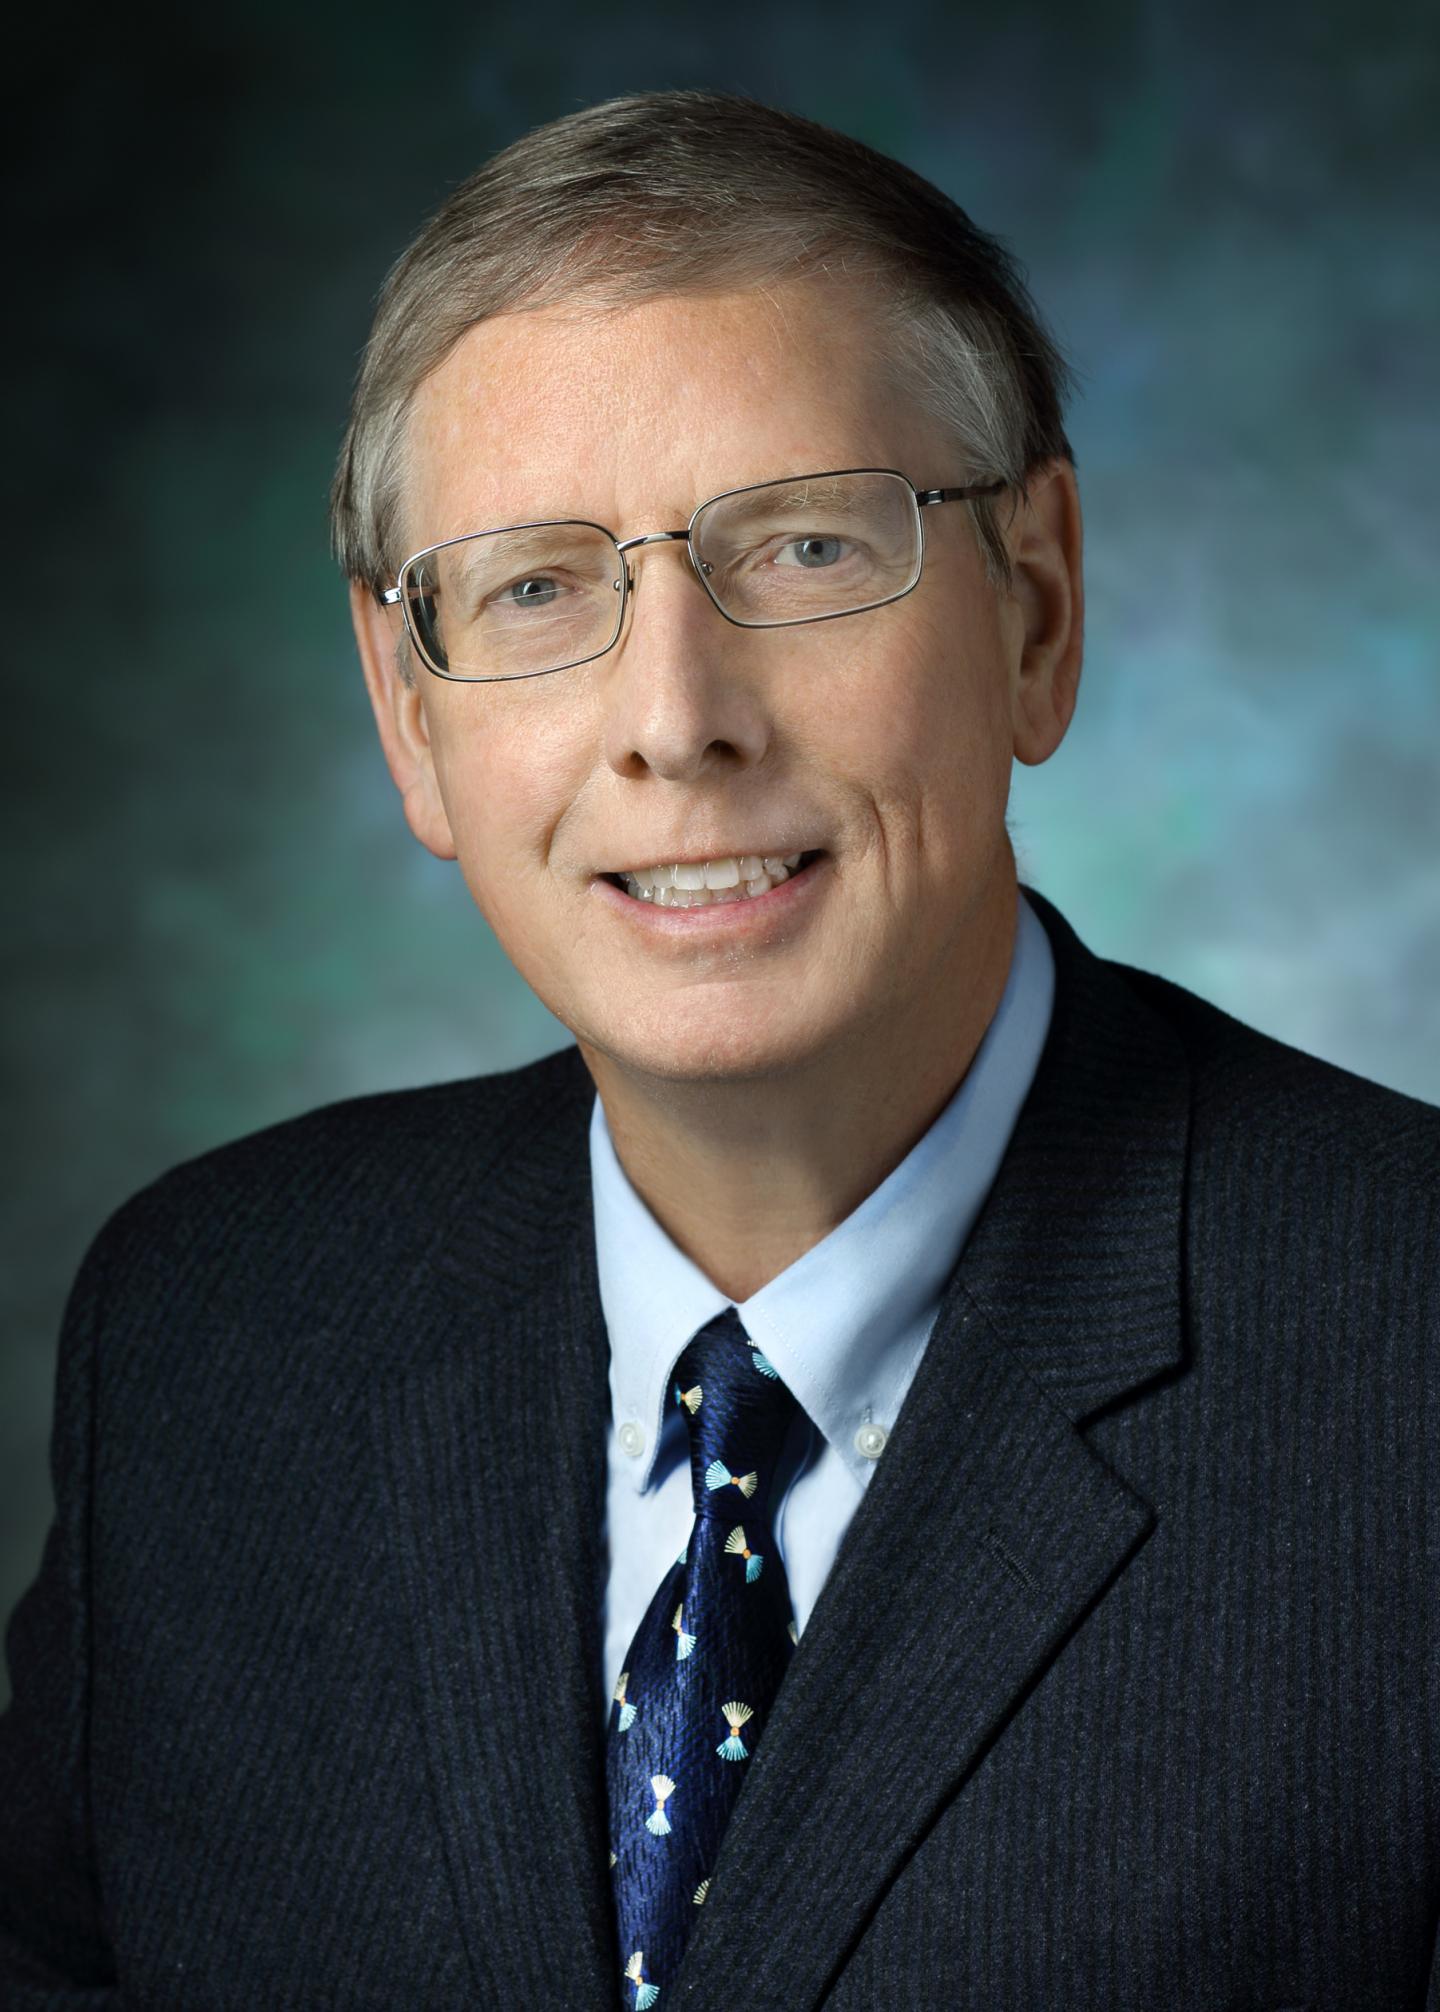 Richard L. Wahl, M.D., FACNM, FACR, Washington University School of Medicine in St. Louis